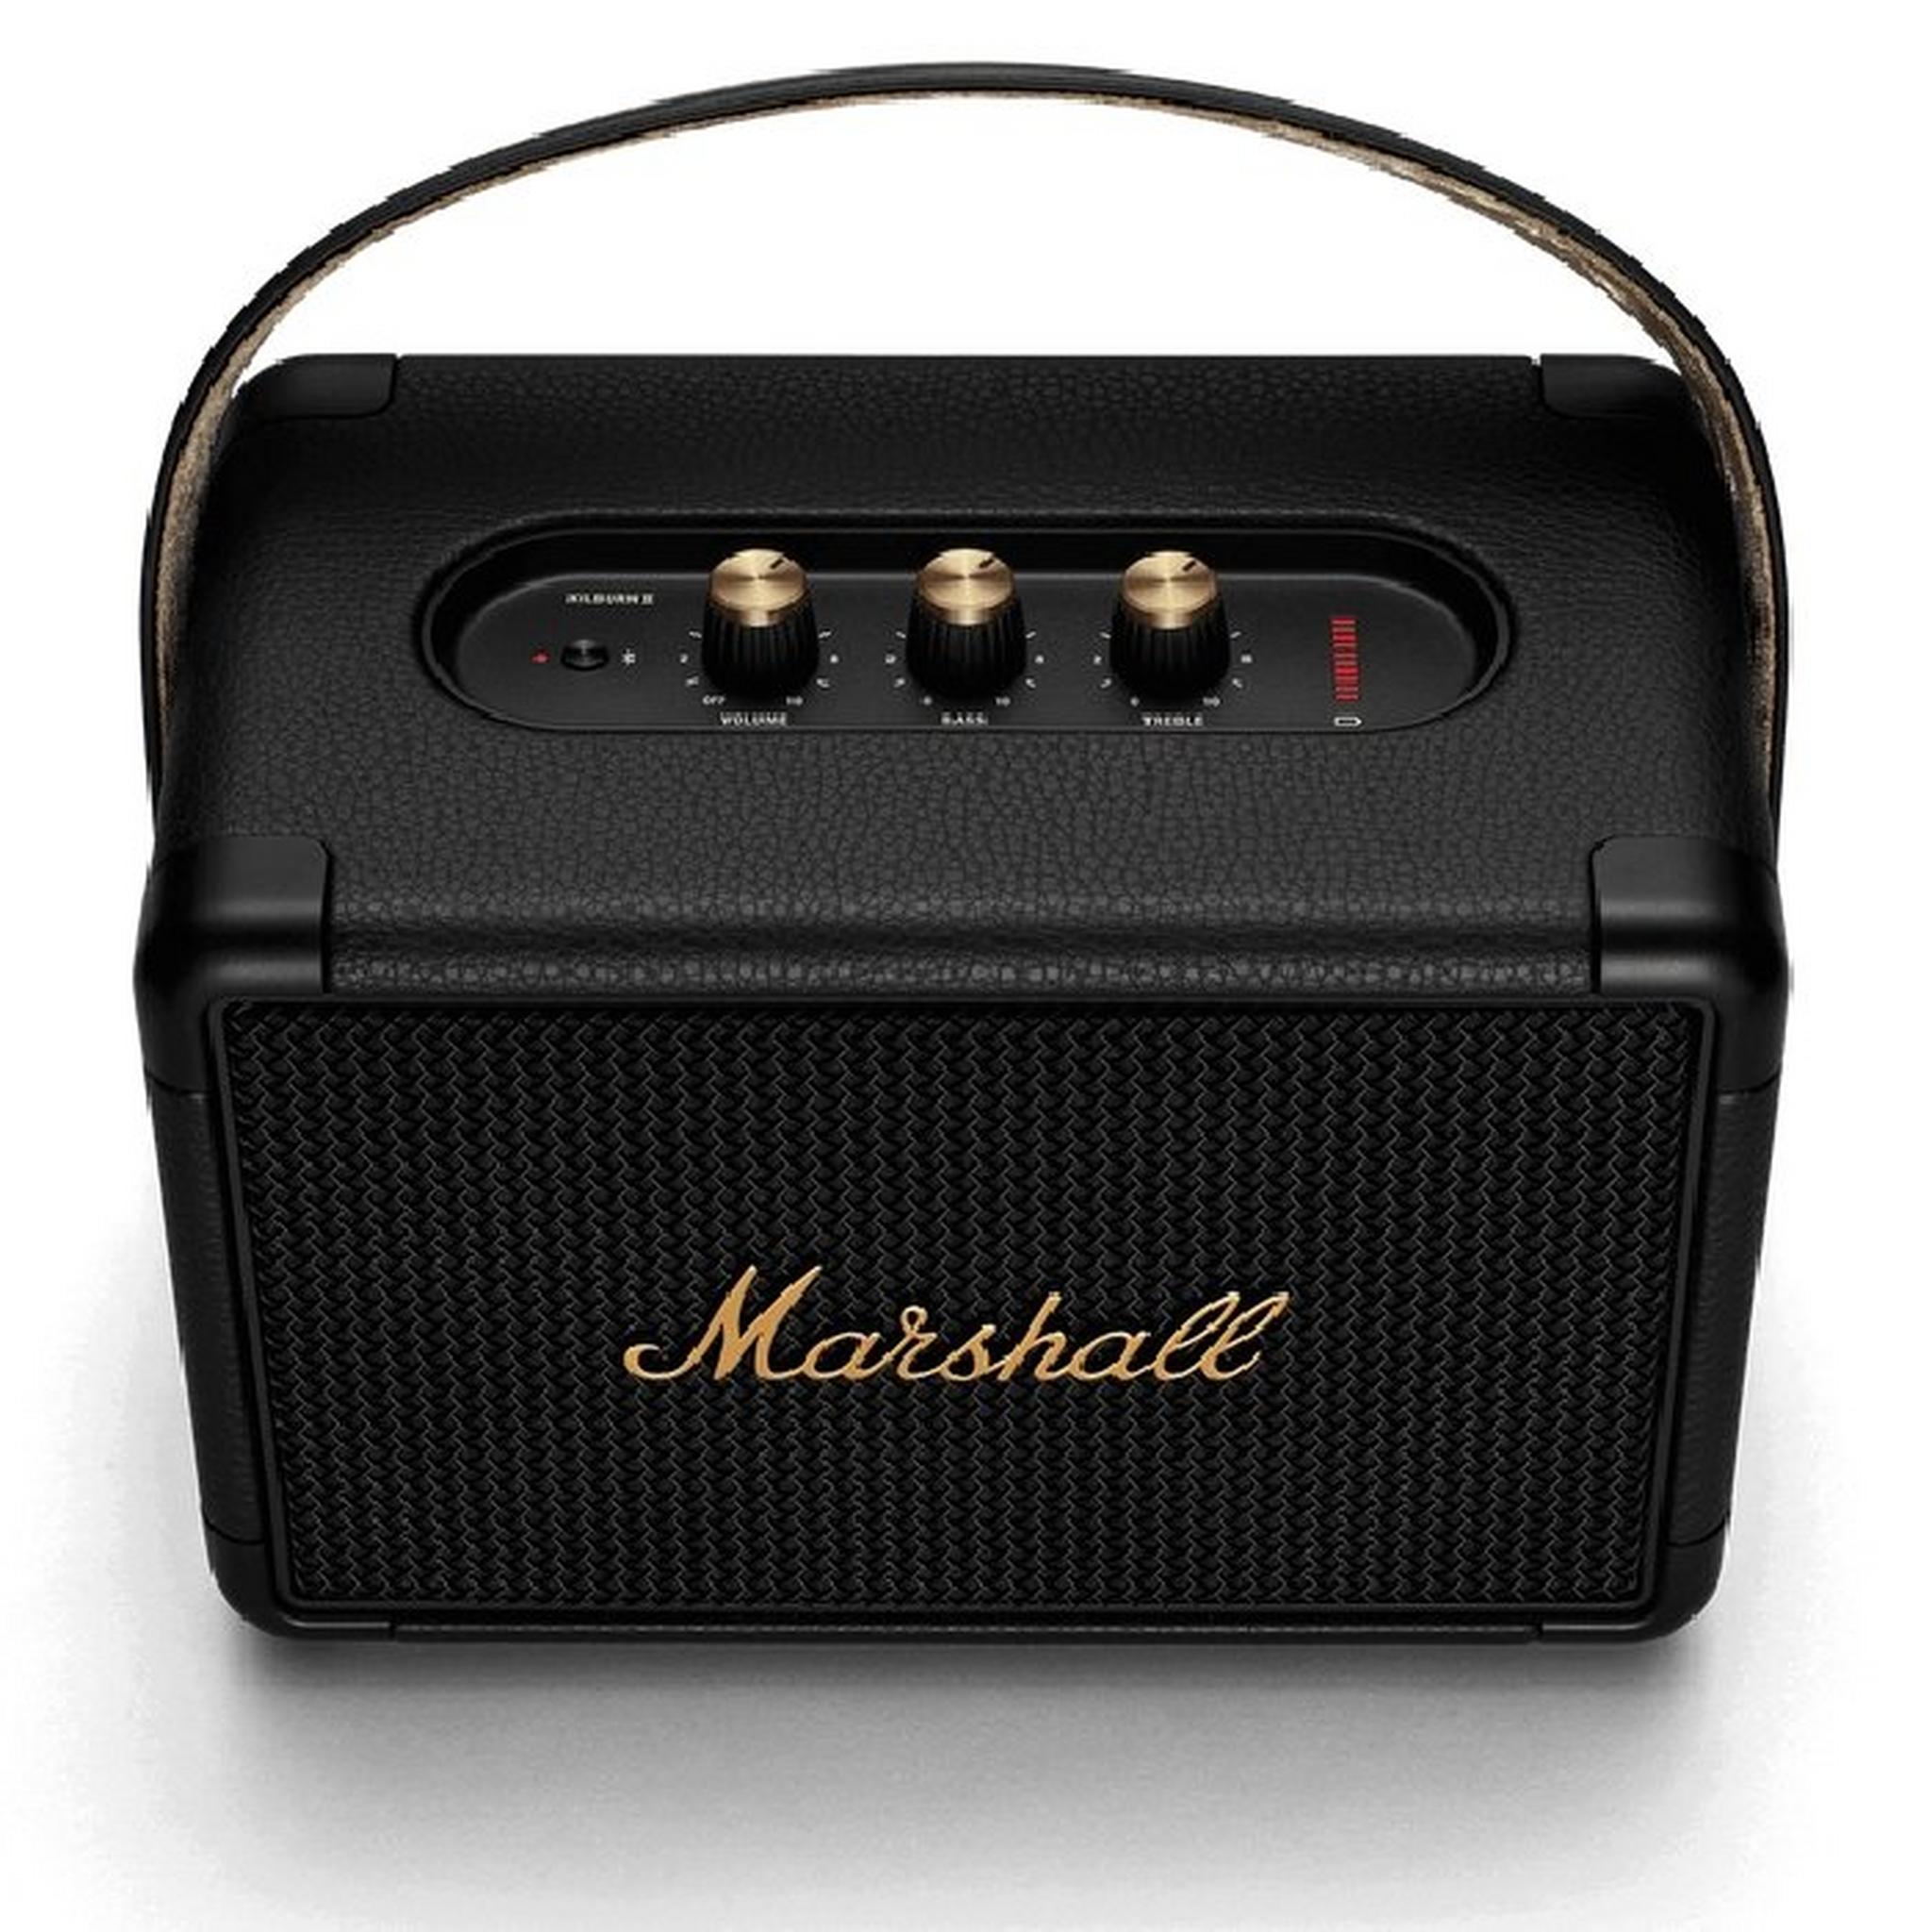 Marshall KILBURN II Wireless Bluetooth Portable Speaker - Black And Brass